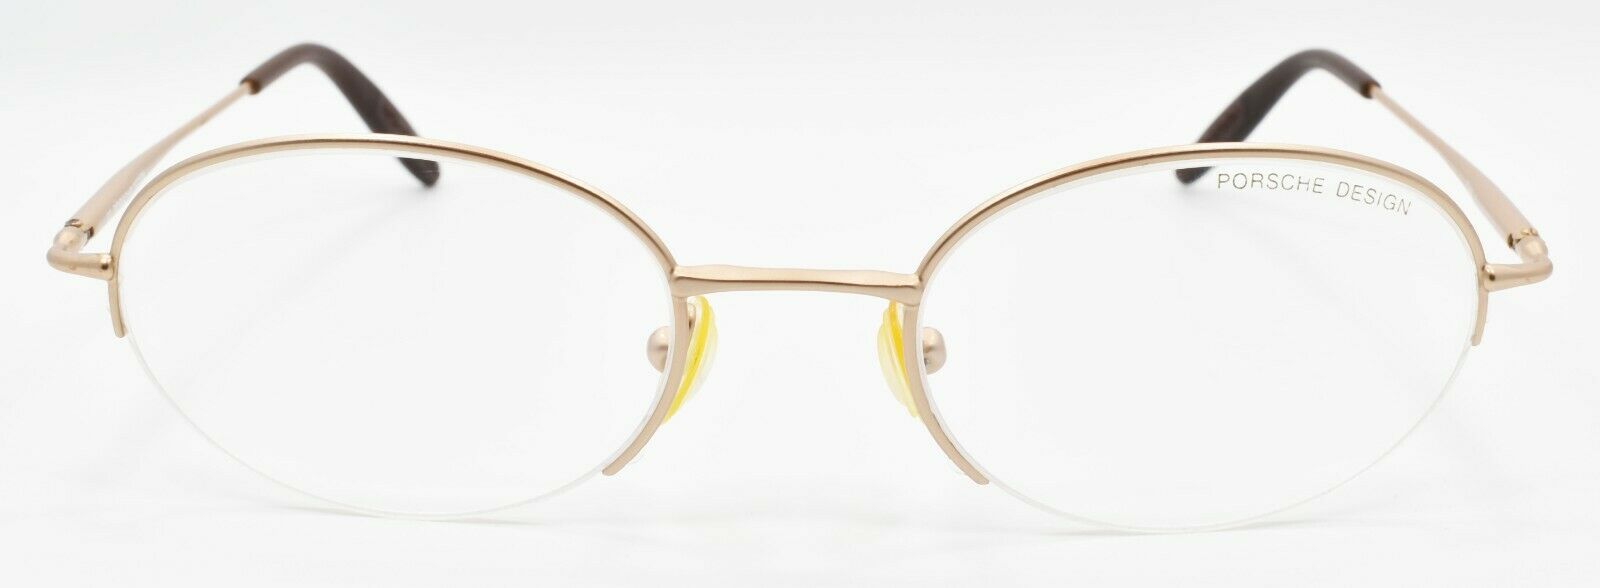 2-Porsche Design P7001 B Eyeglasses Frames Half-rim SMALL 48-20-130 Gold ITALY-4035247505397-IKSpecs